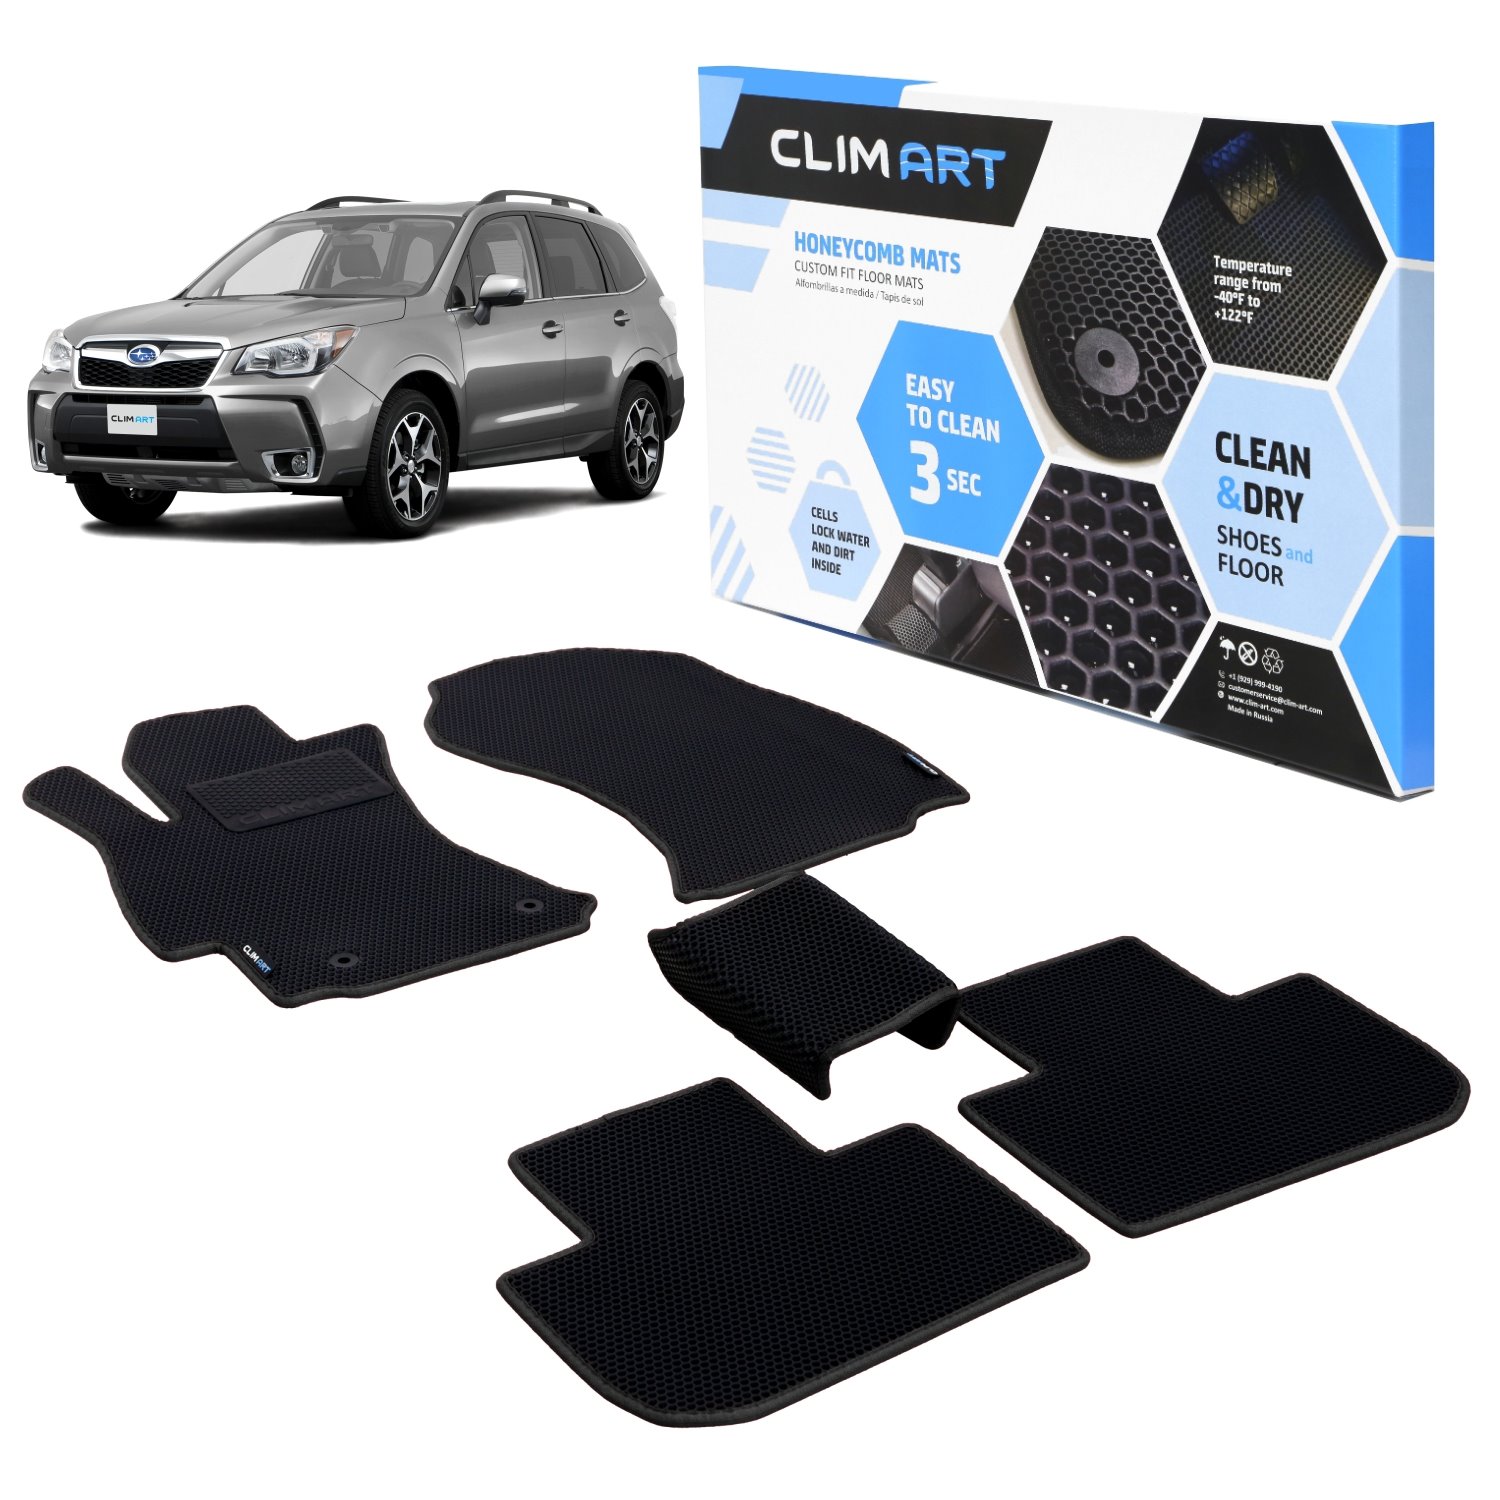 CLIM ART Honeycomb Custom Fit Floor Mats for 2014-2018 Subaru Forester